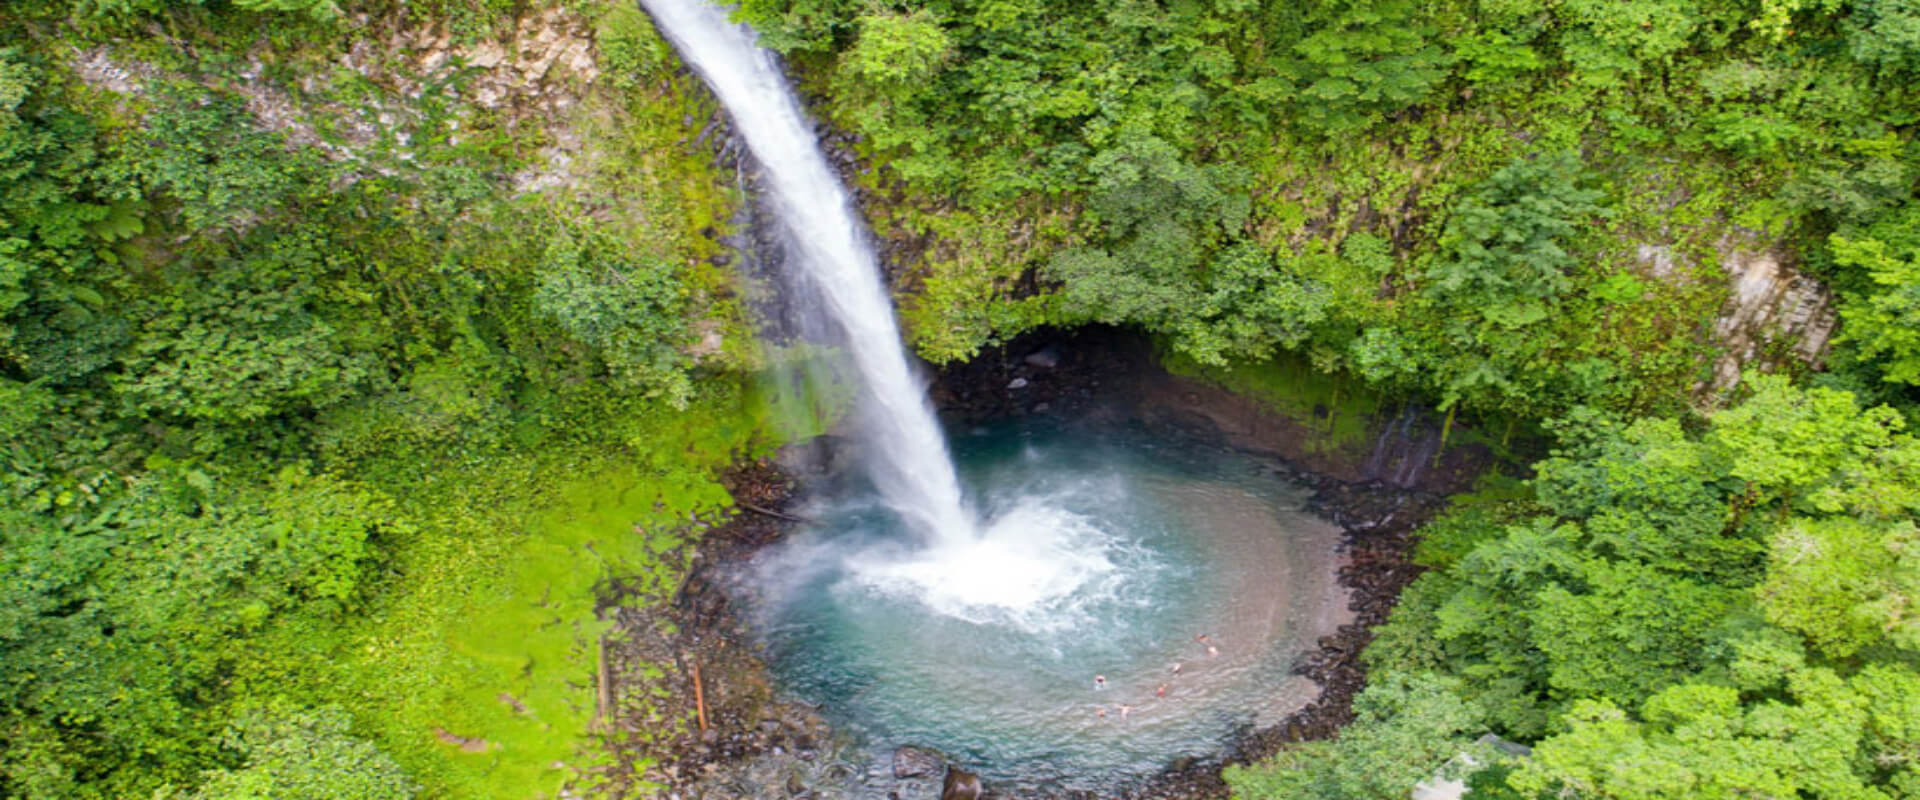 Caminata guiada a la catarata La Fortuna | Costa Rica Jade Tours